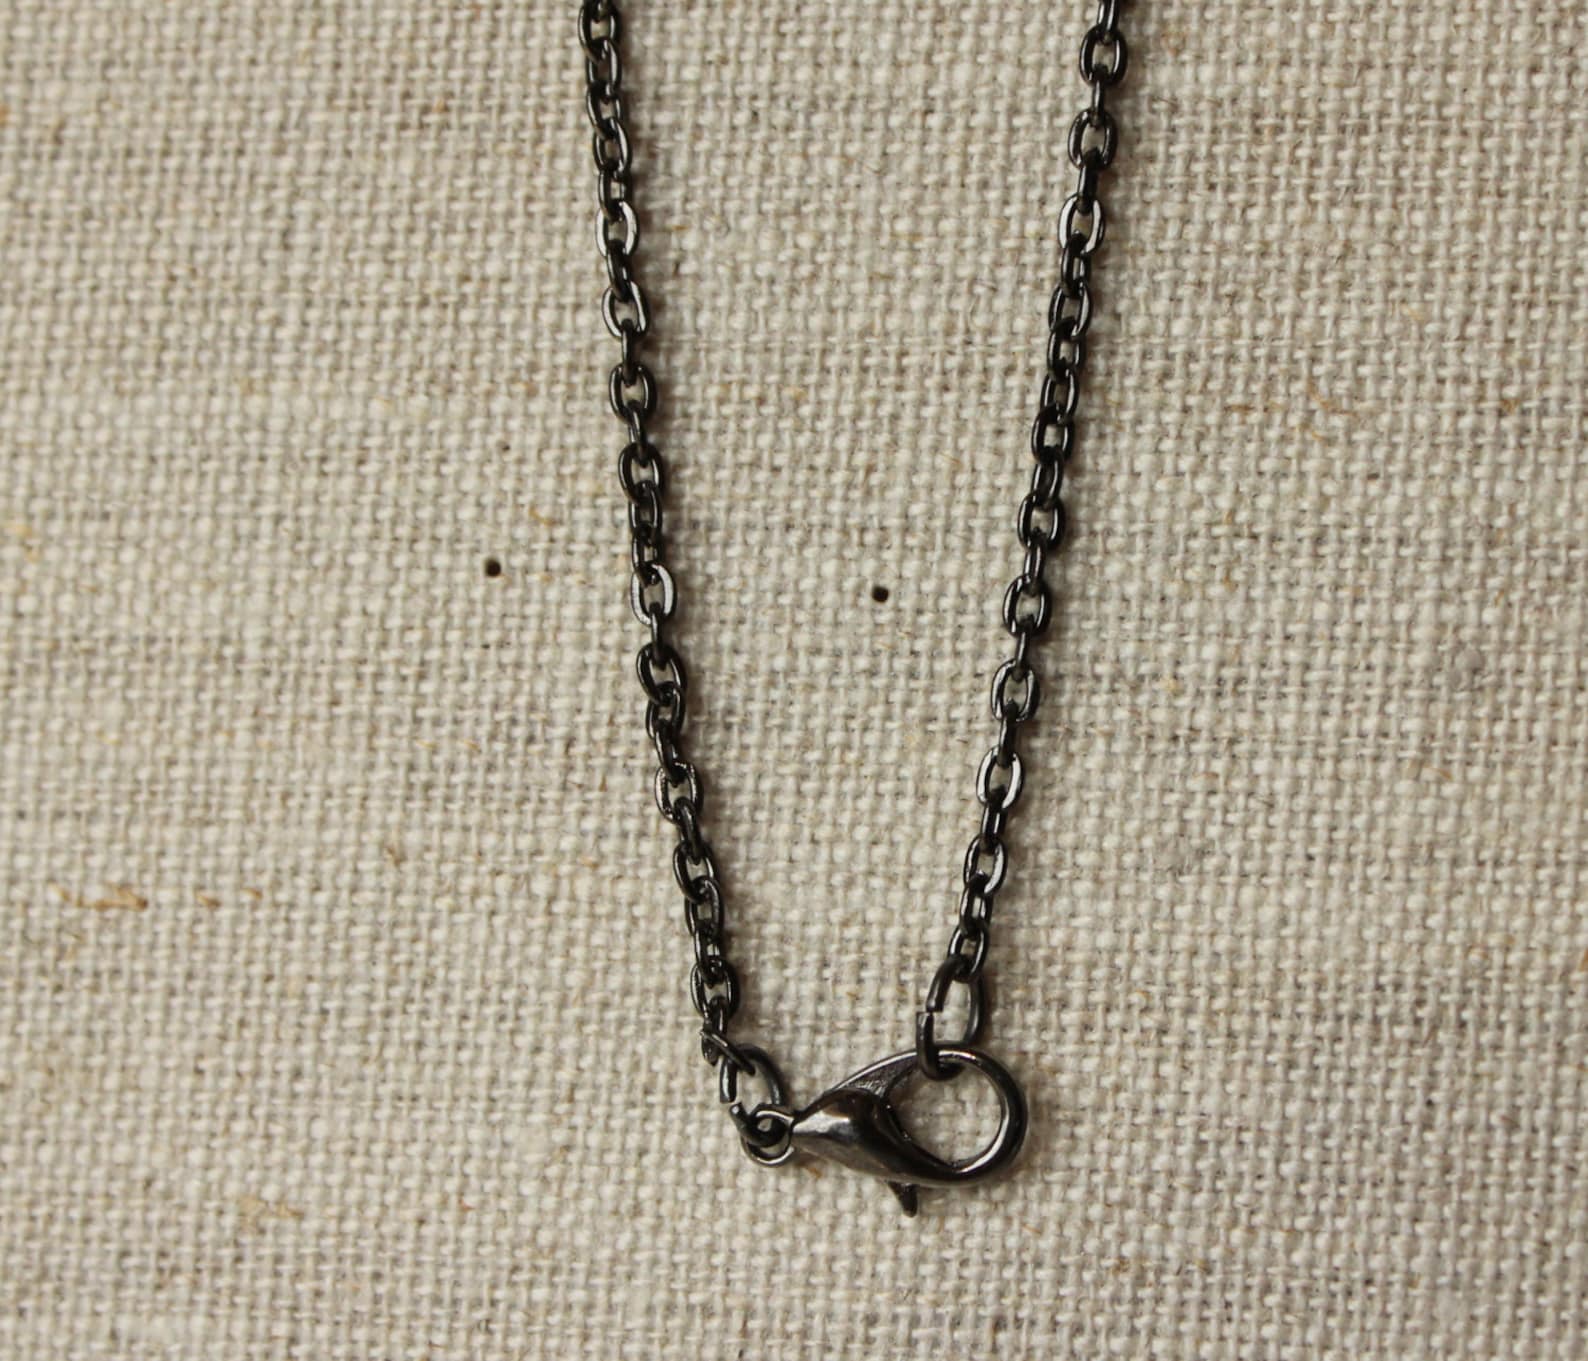 14 inch 40 inch antiqued silver chain necklace MEDIUM dark | Etsy